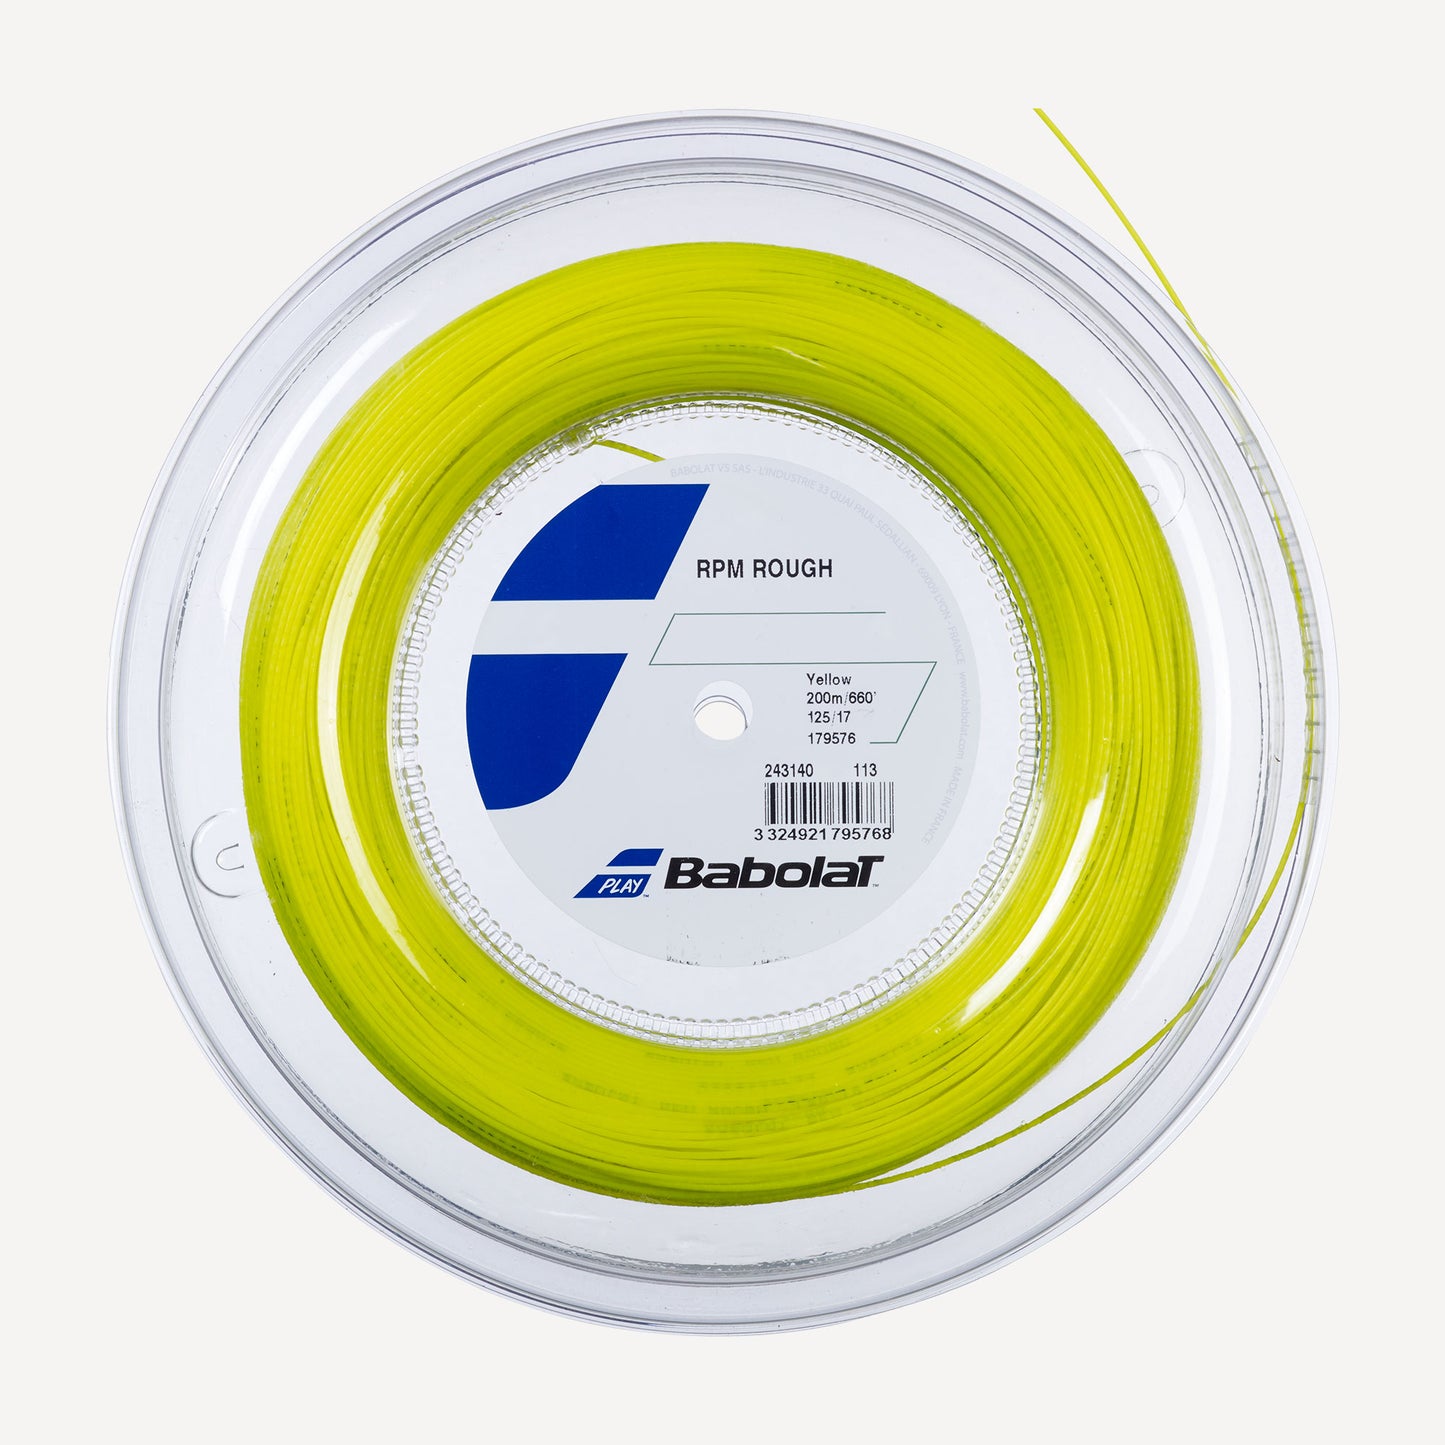 Babolat RPM Rough Tennis String Reel 200m Yellow